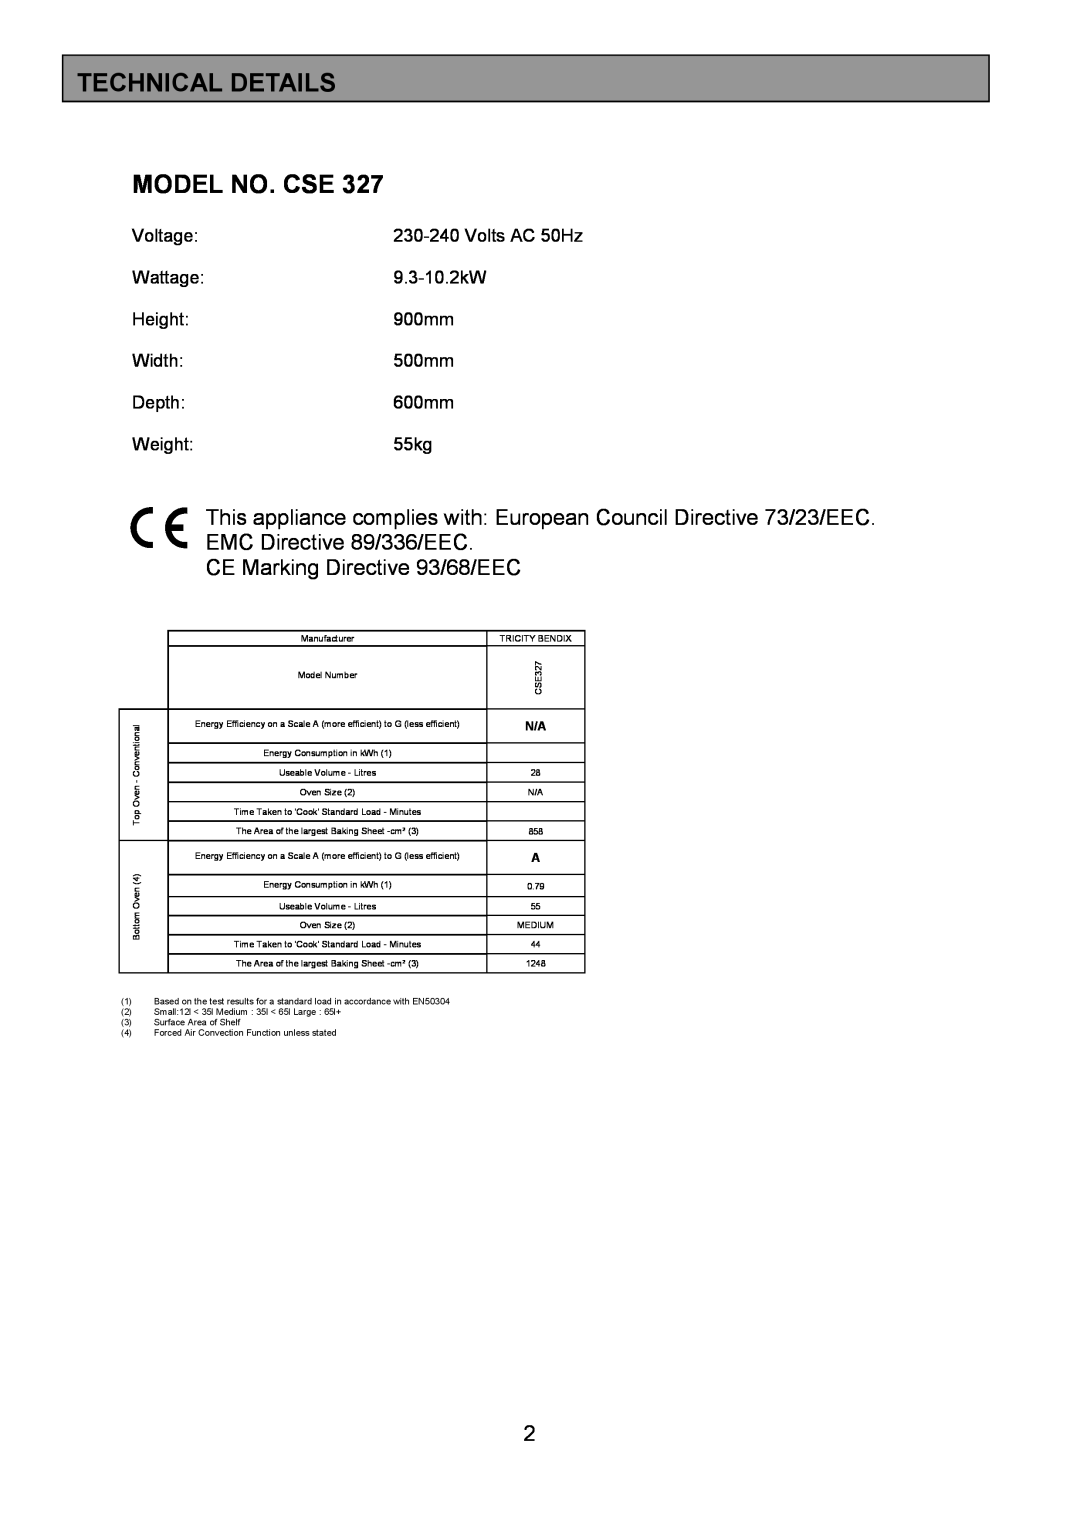 Tricity Bendix CSE327 installation instructions Technical Details, Model No. Cse, CE Marking Directive 93/68/EEC 